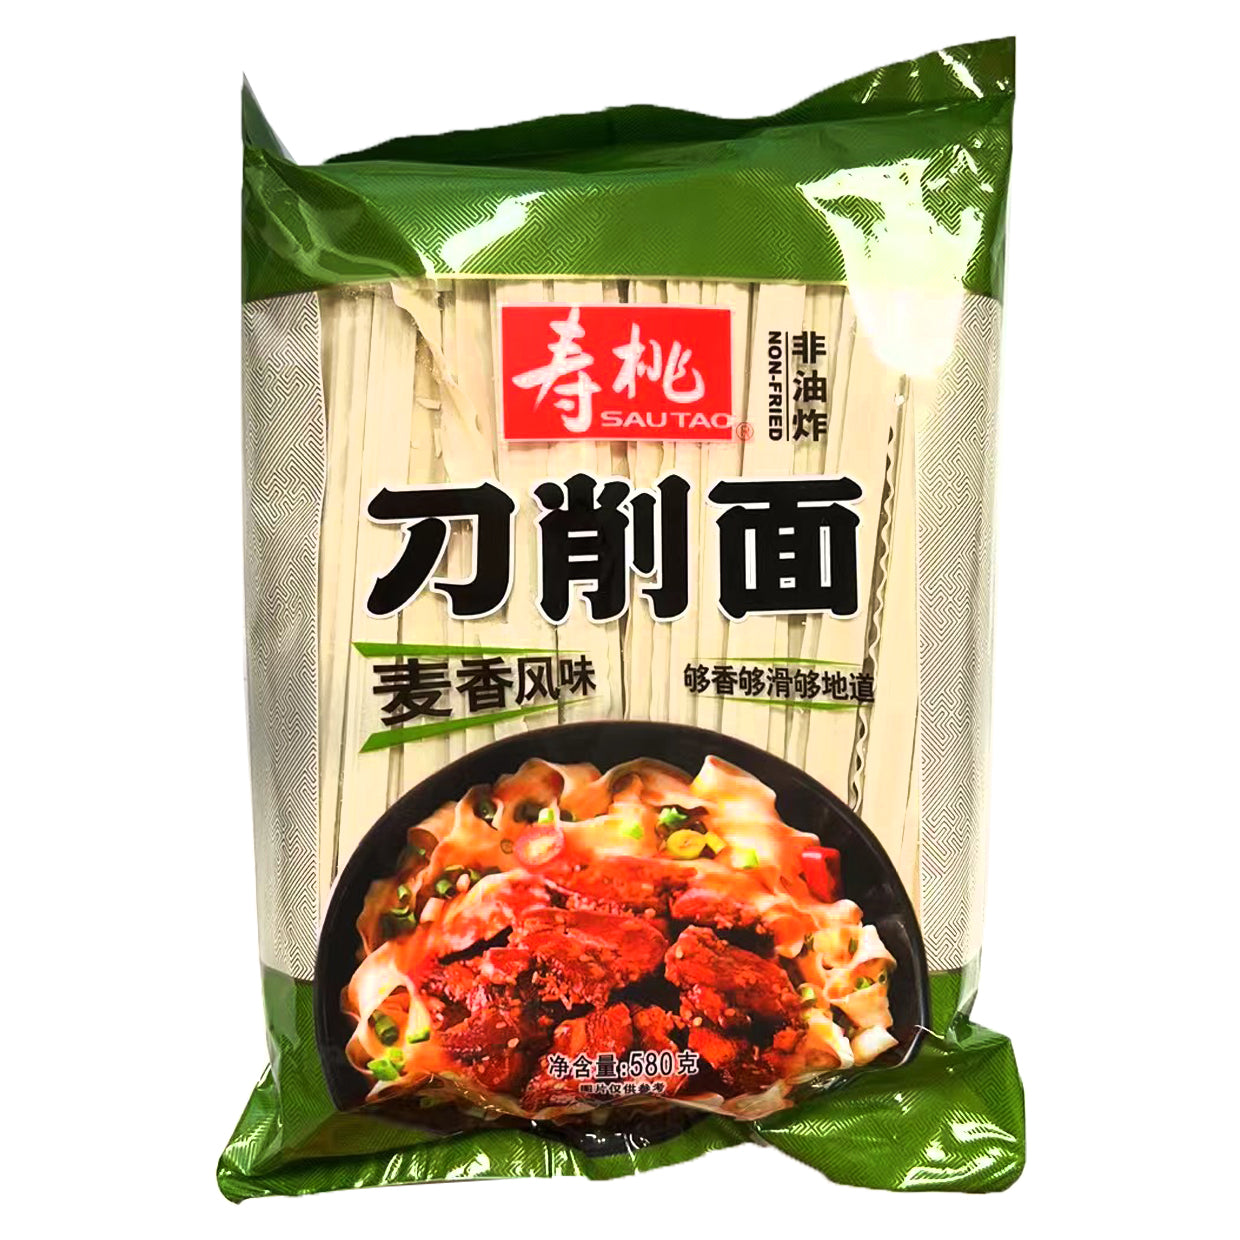 Sau Tao Flat Sliced Noodle Wheat Flavour 580g ~ 寿桃牌 刀削面 麦香风味 580g